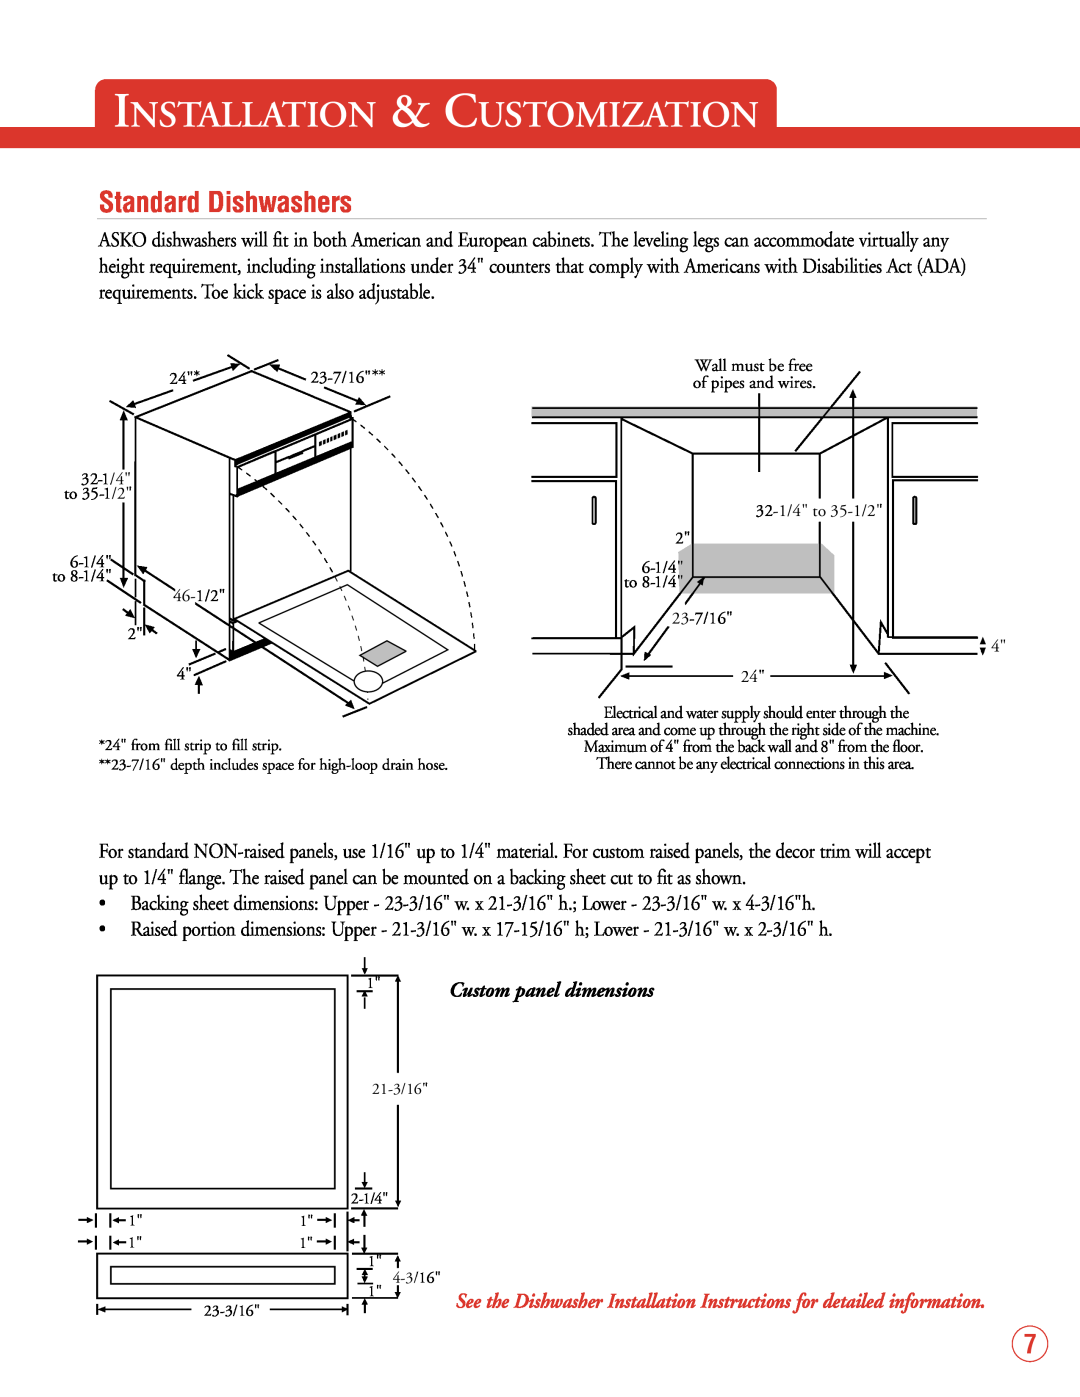 Fisher & Paykel 2002 VRS 2.0 manual Installation & Customization, Standard Dishwashers 